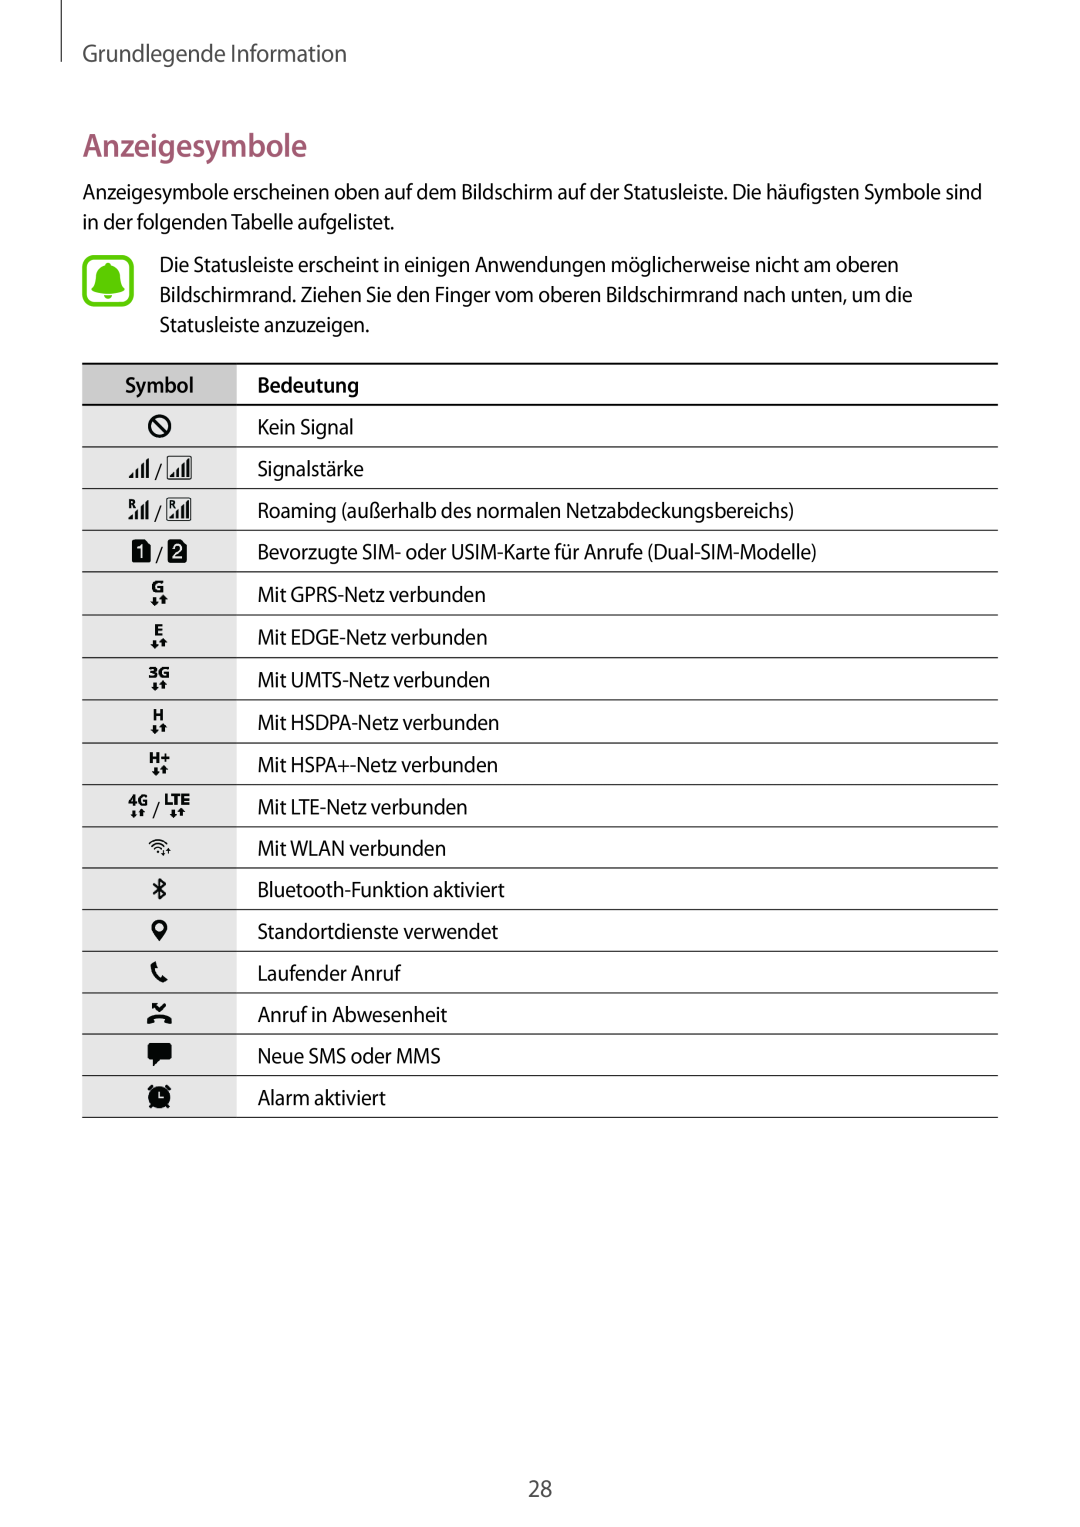 Samsung SM-J530FZKAEUR, SM-J530FZDATCL, SM-J530FZSAEUR manual Anzeigesymbole, Symbol, Bedeutung, Grundlegende Information 